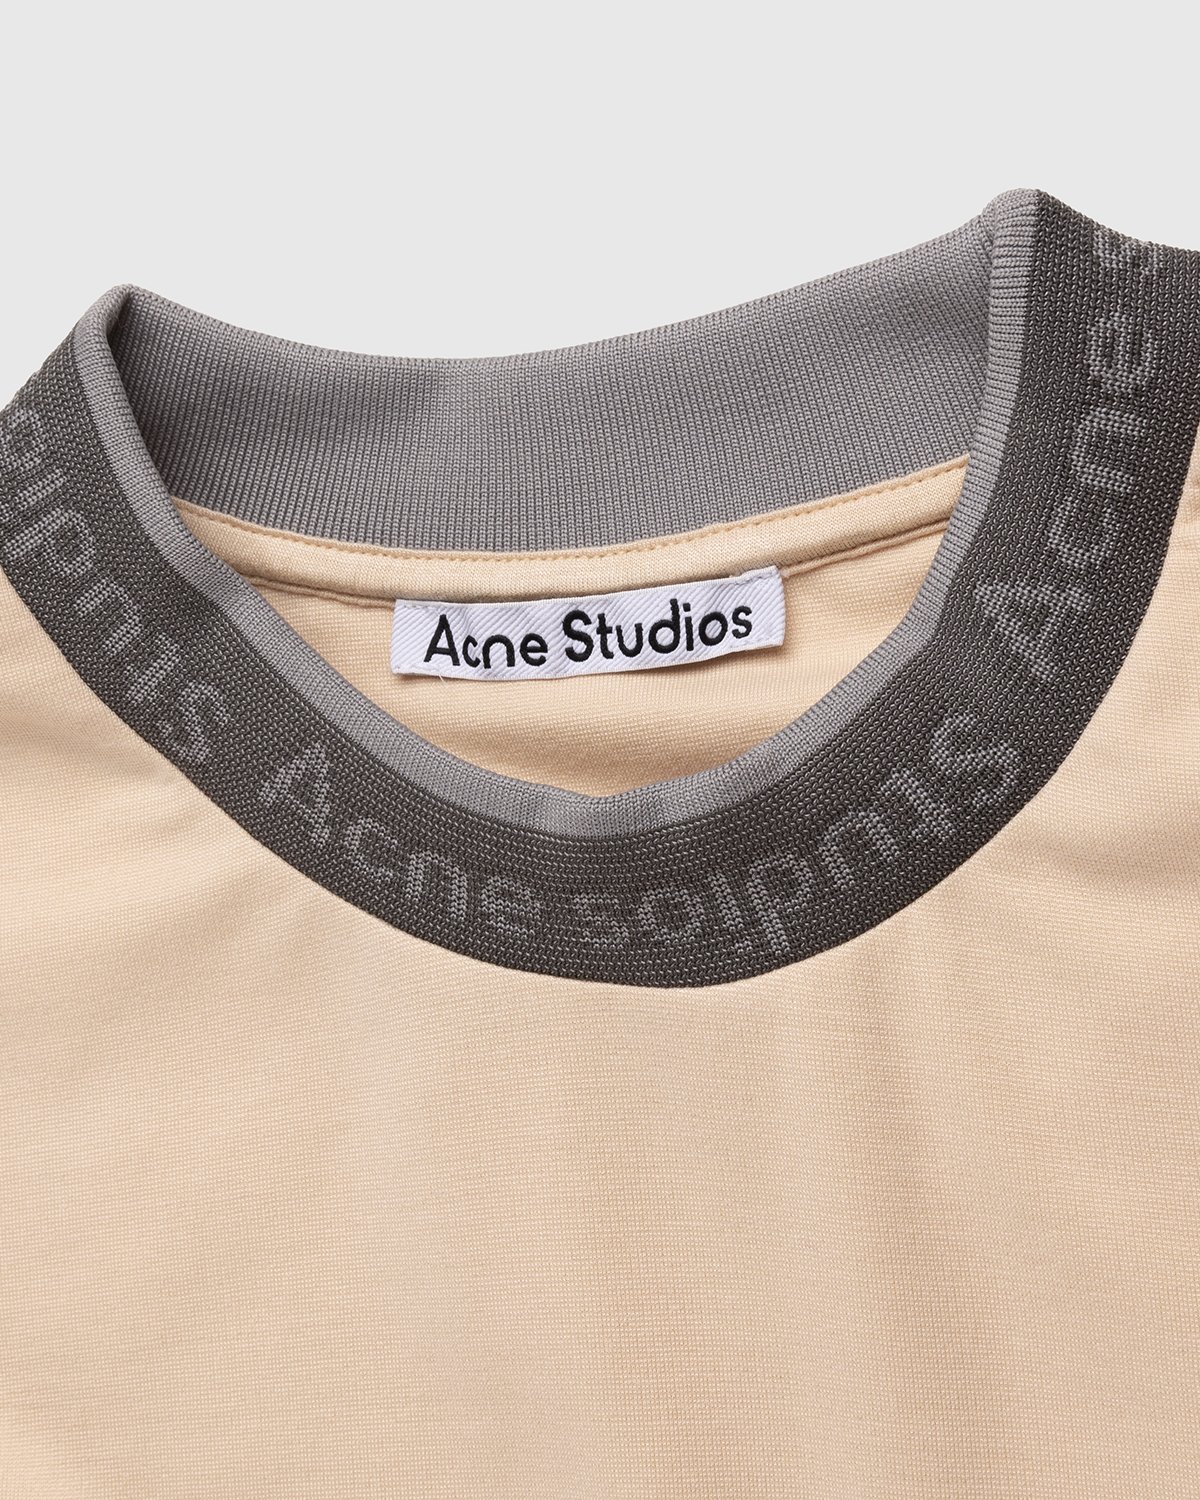 Acne Studios - Logo Collar T-Shirt Cream Beige - Clothing - Beige - Image 4